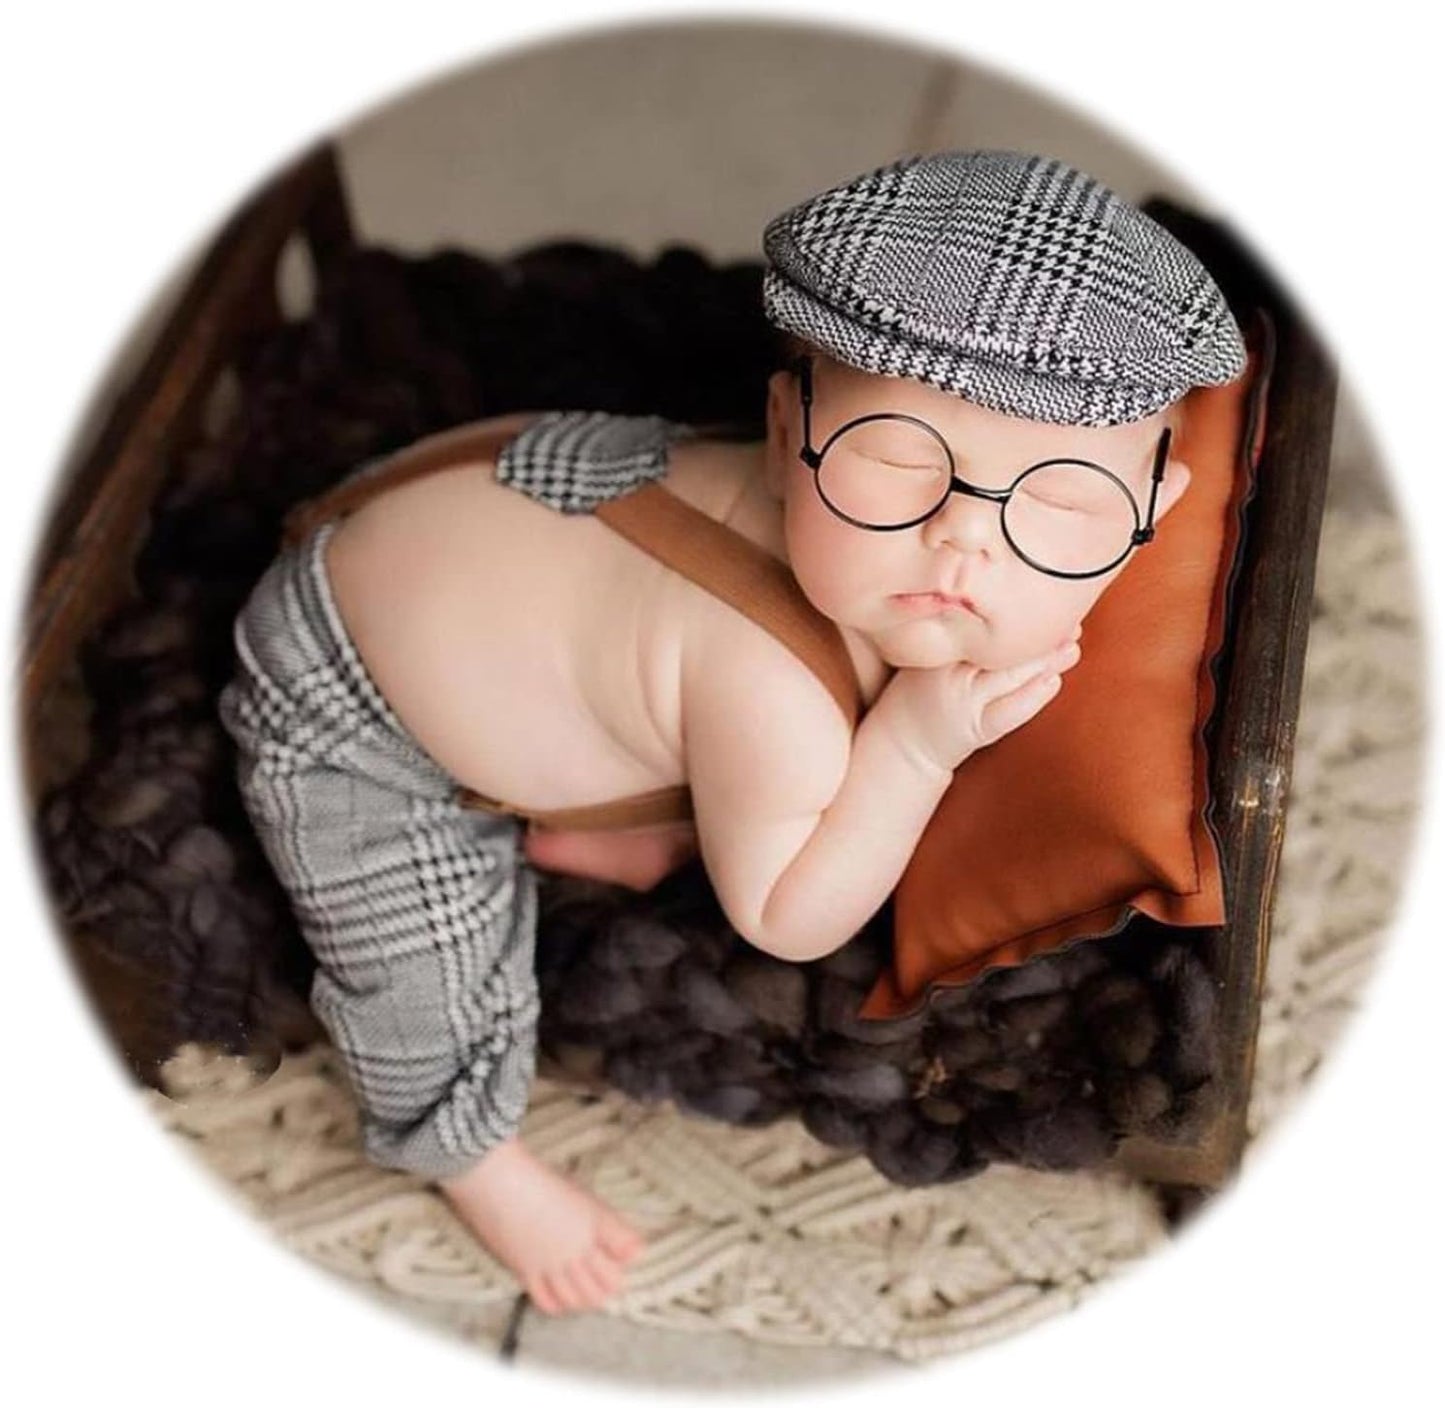 Ederafoto Newborn Photography Outfits Props Baby Photoshoots Costume Boy Photo Posing Lattice Suspender Pants Hats